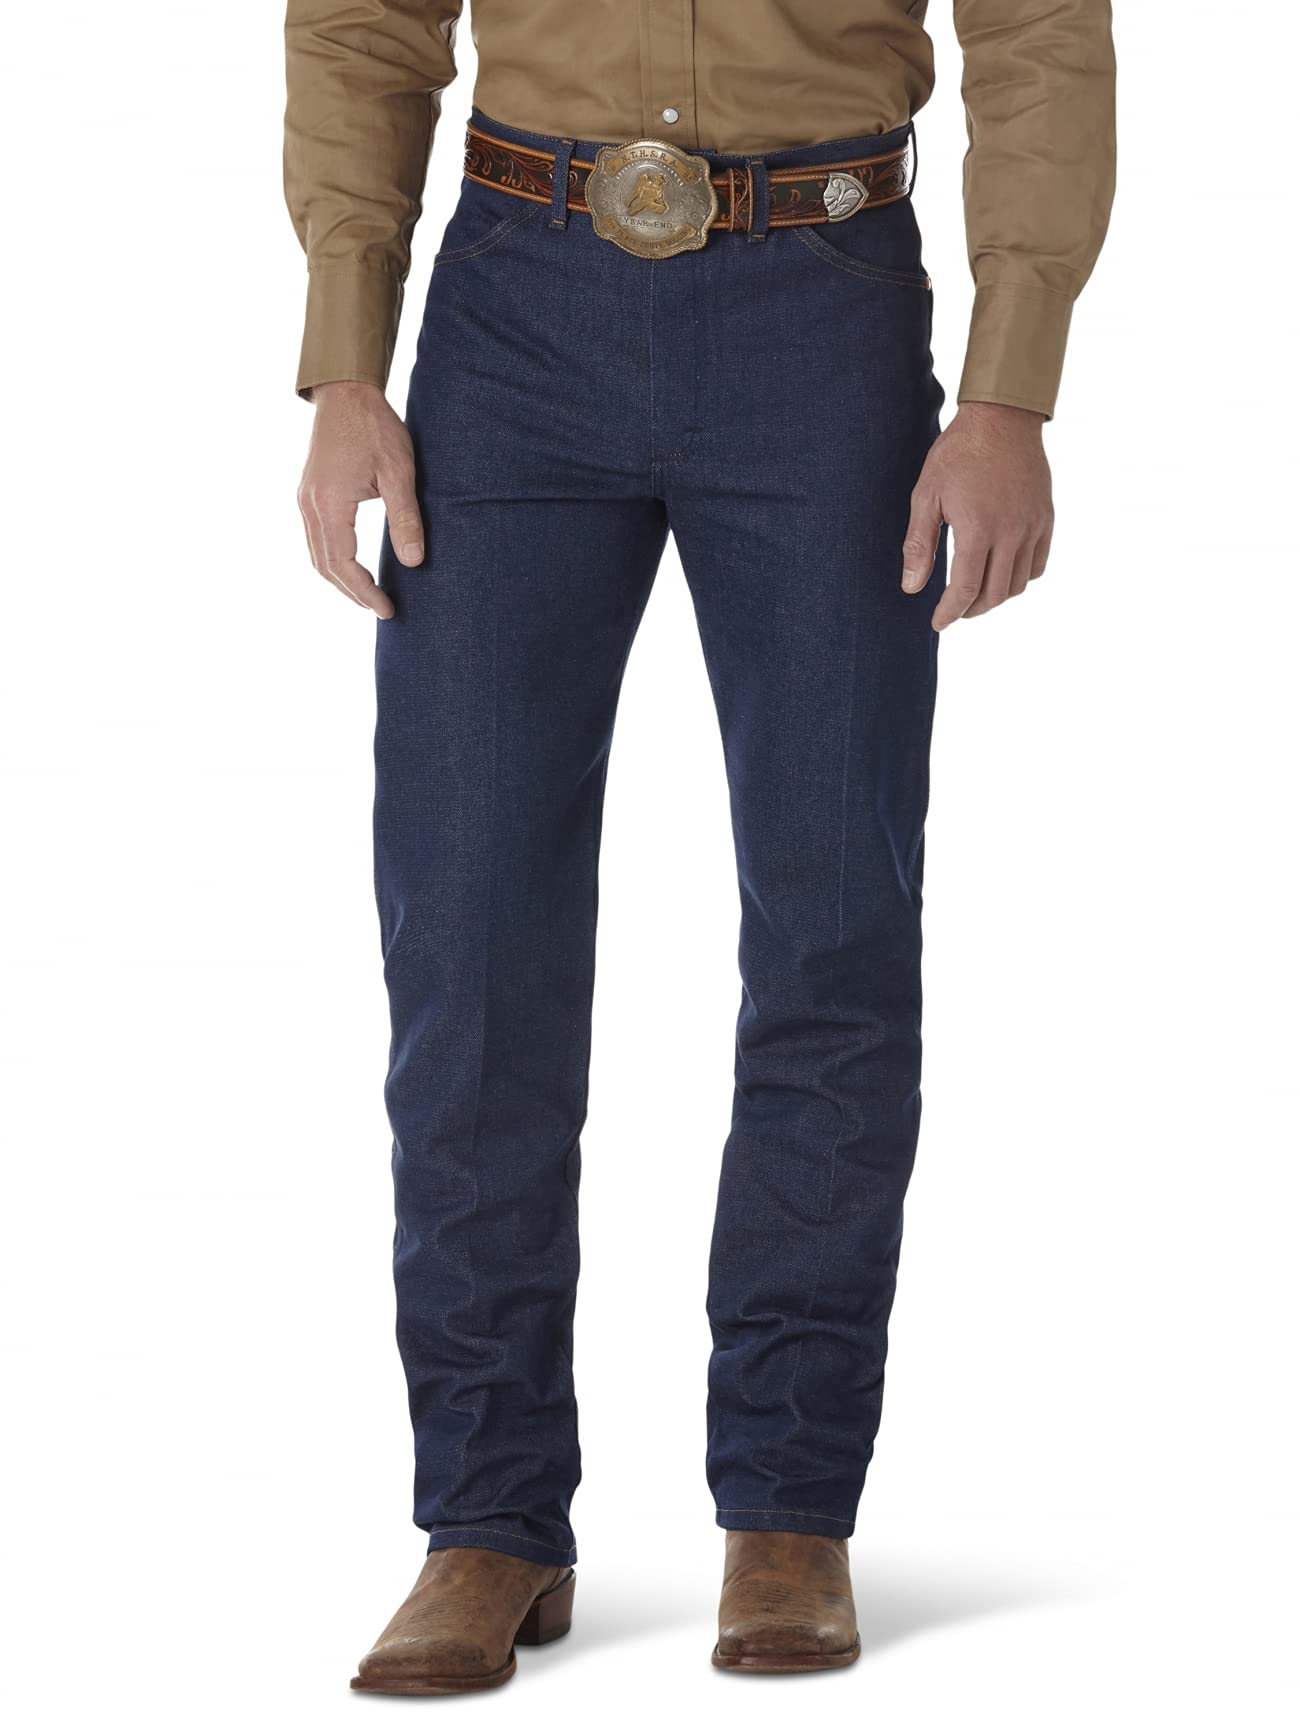 Wrangler Men's 13mwz Cowboy Cut Original Fit Jean